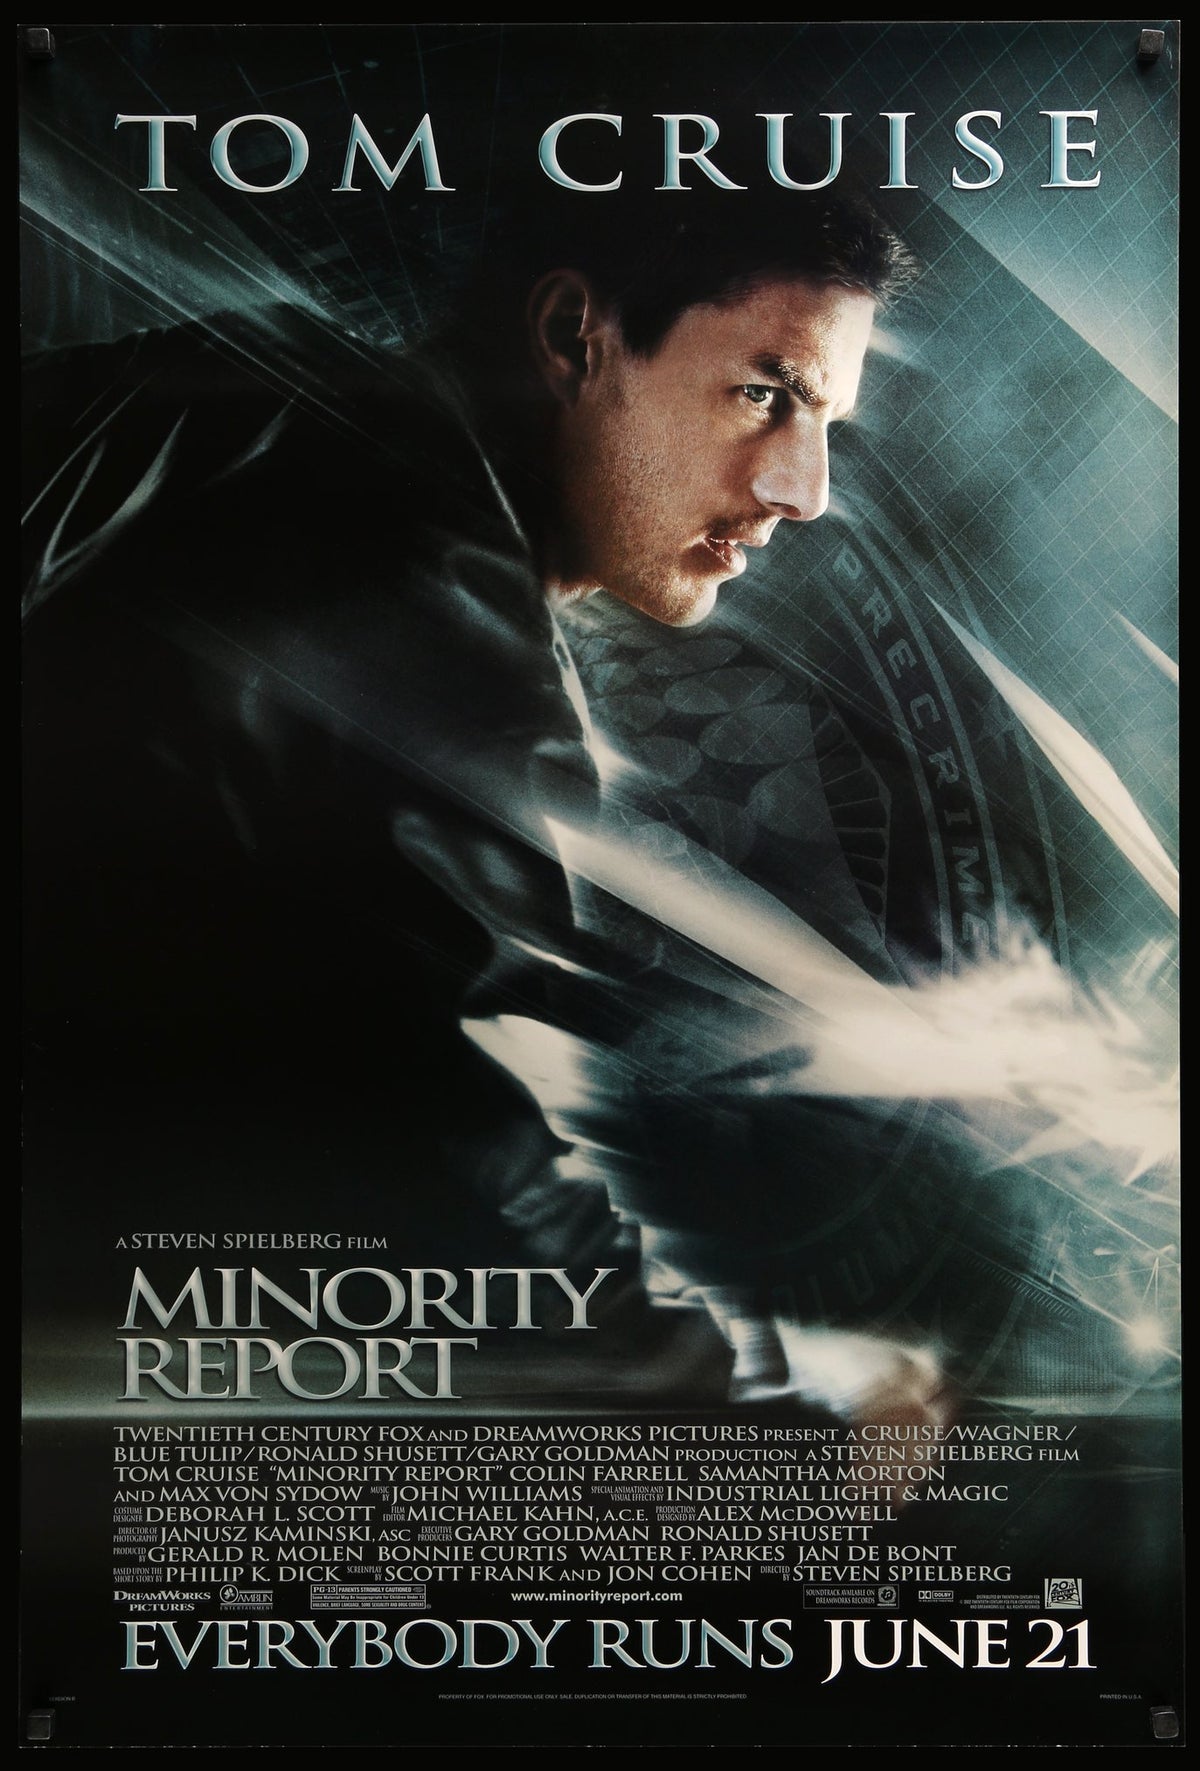 Minority Report (2002) original movie poster for sale at Original Film Art